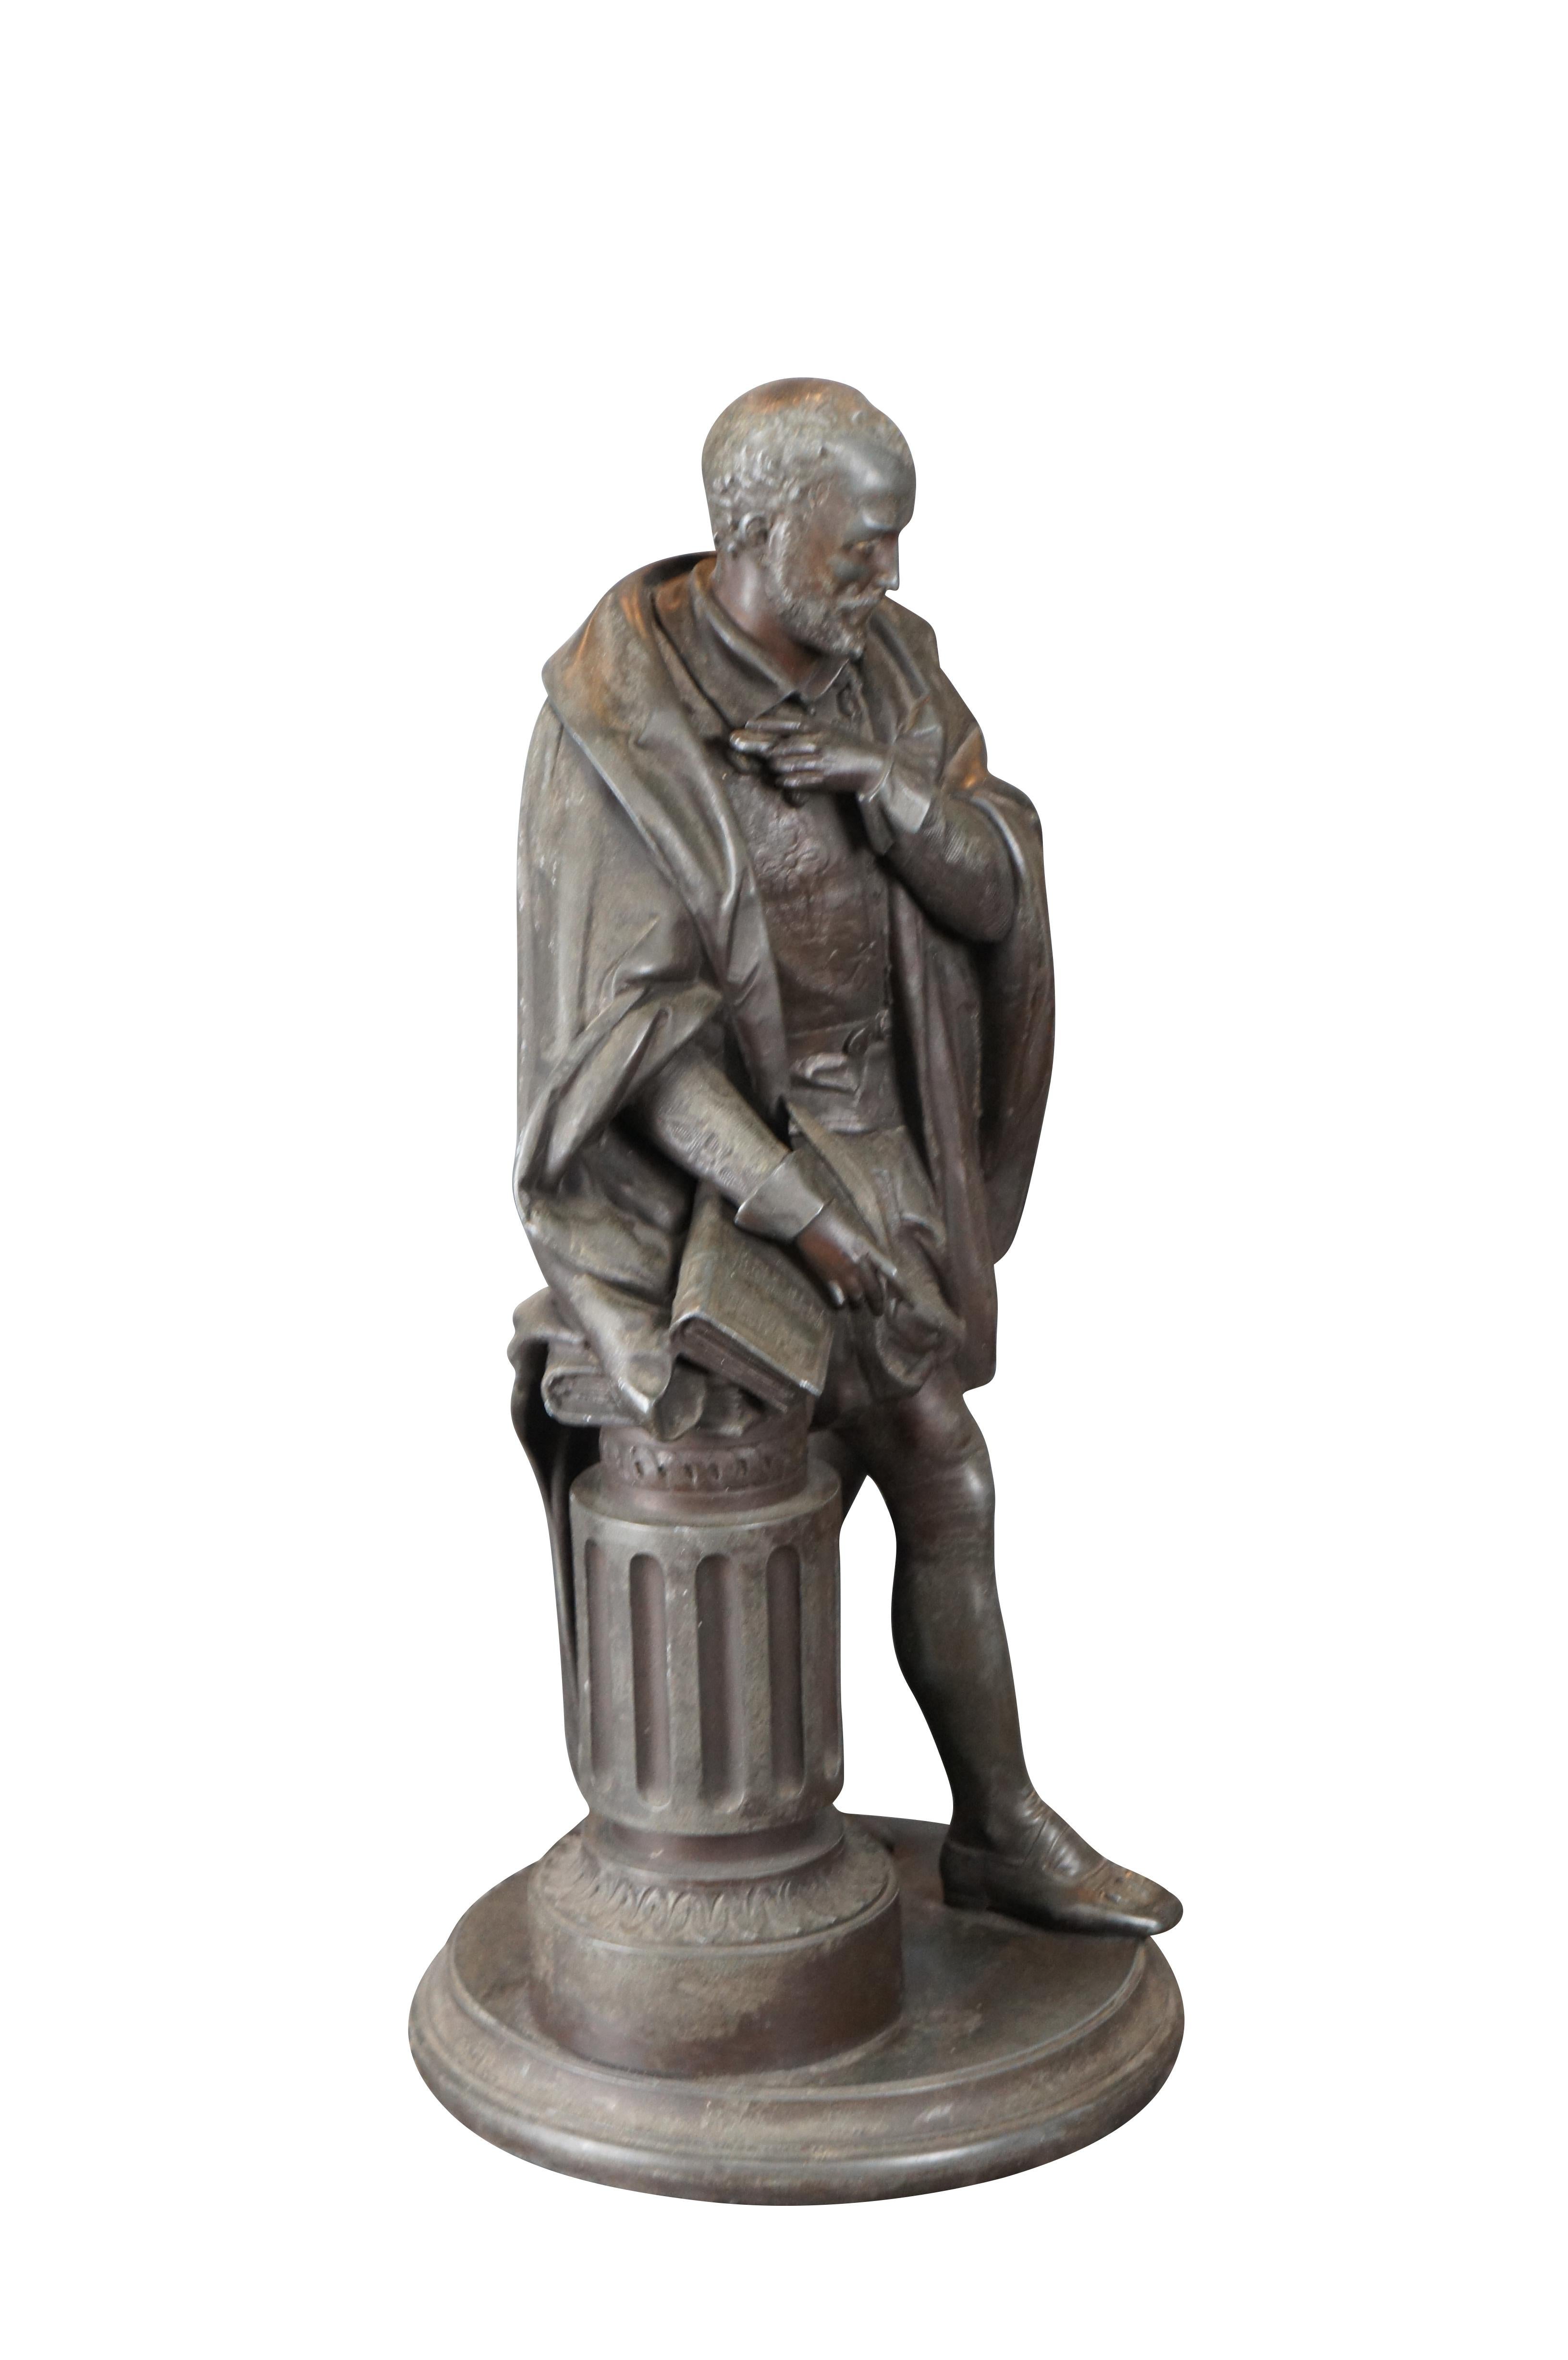 Antike William Shakespeare-Skulptur eines Philosophen aus Zinn, stehende Skulptur, Philosoph, 19